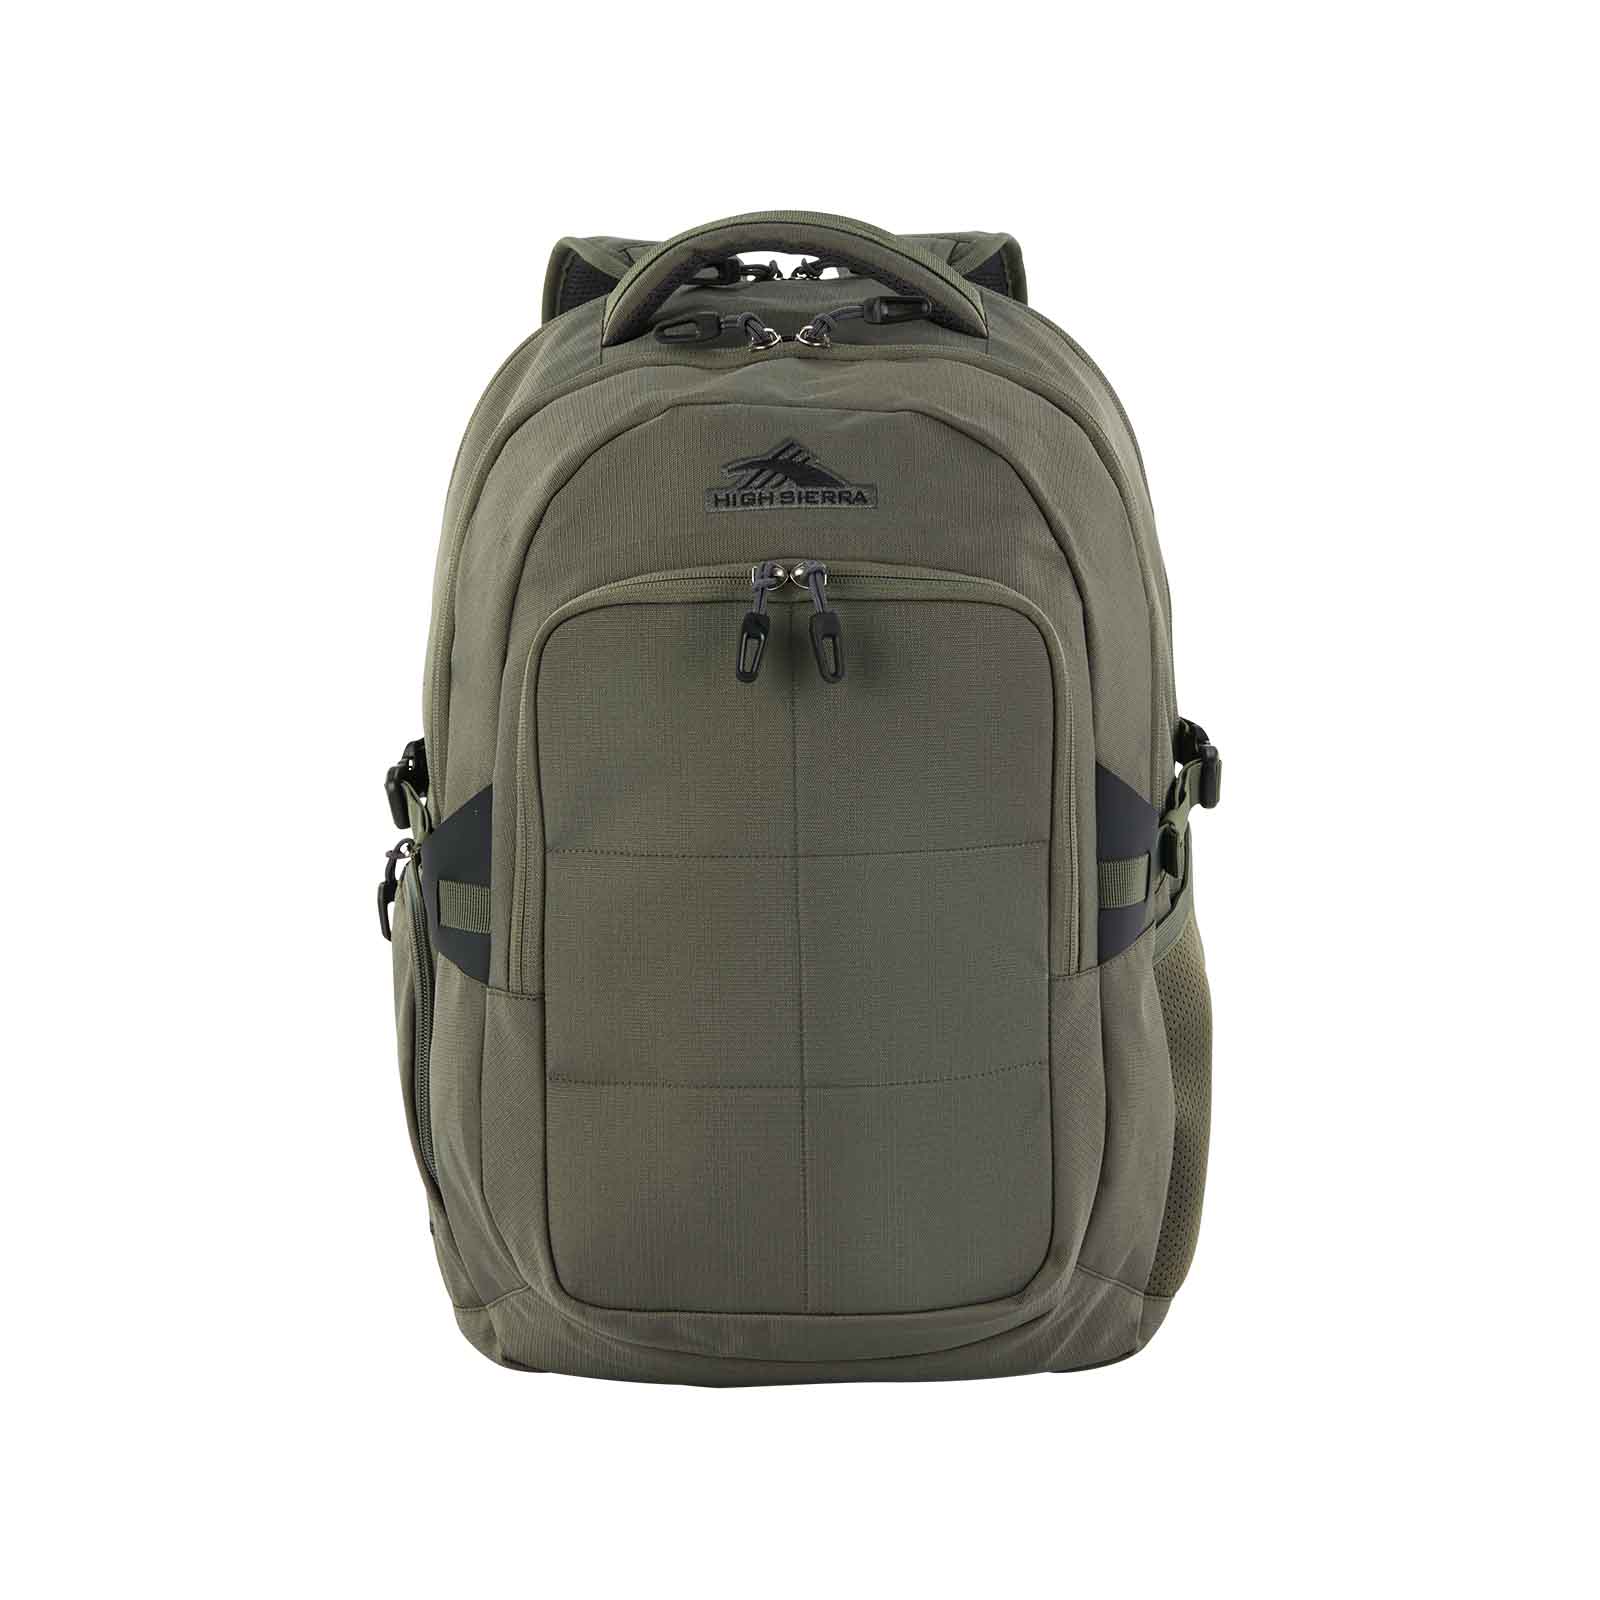 High-Sierra-Trooper-17-Inch-Laptop-Backpack-Khaki-Front